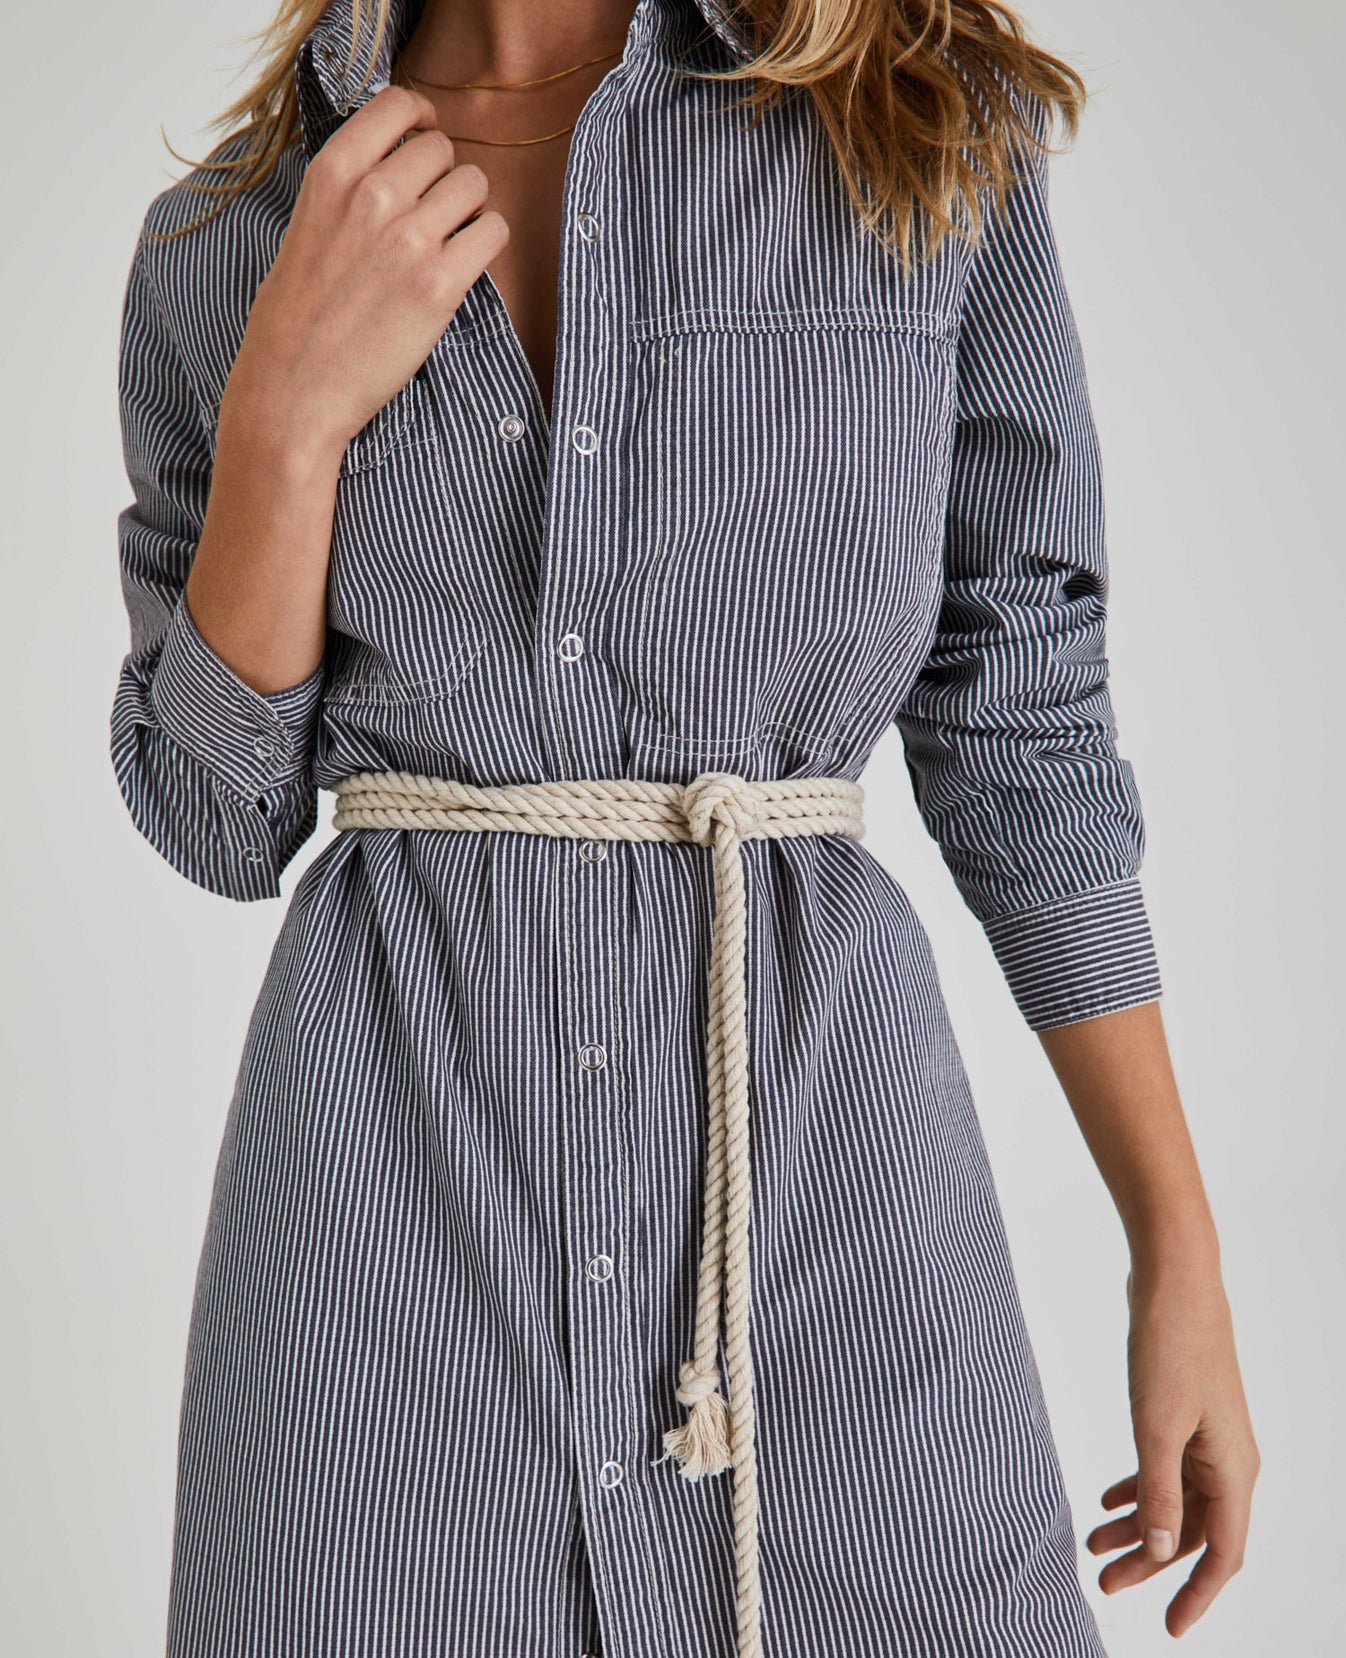 Taylor Dress Carlisle Stripe-Indigo Workwear Dress Women Onepiece Photo 7